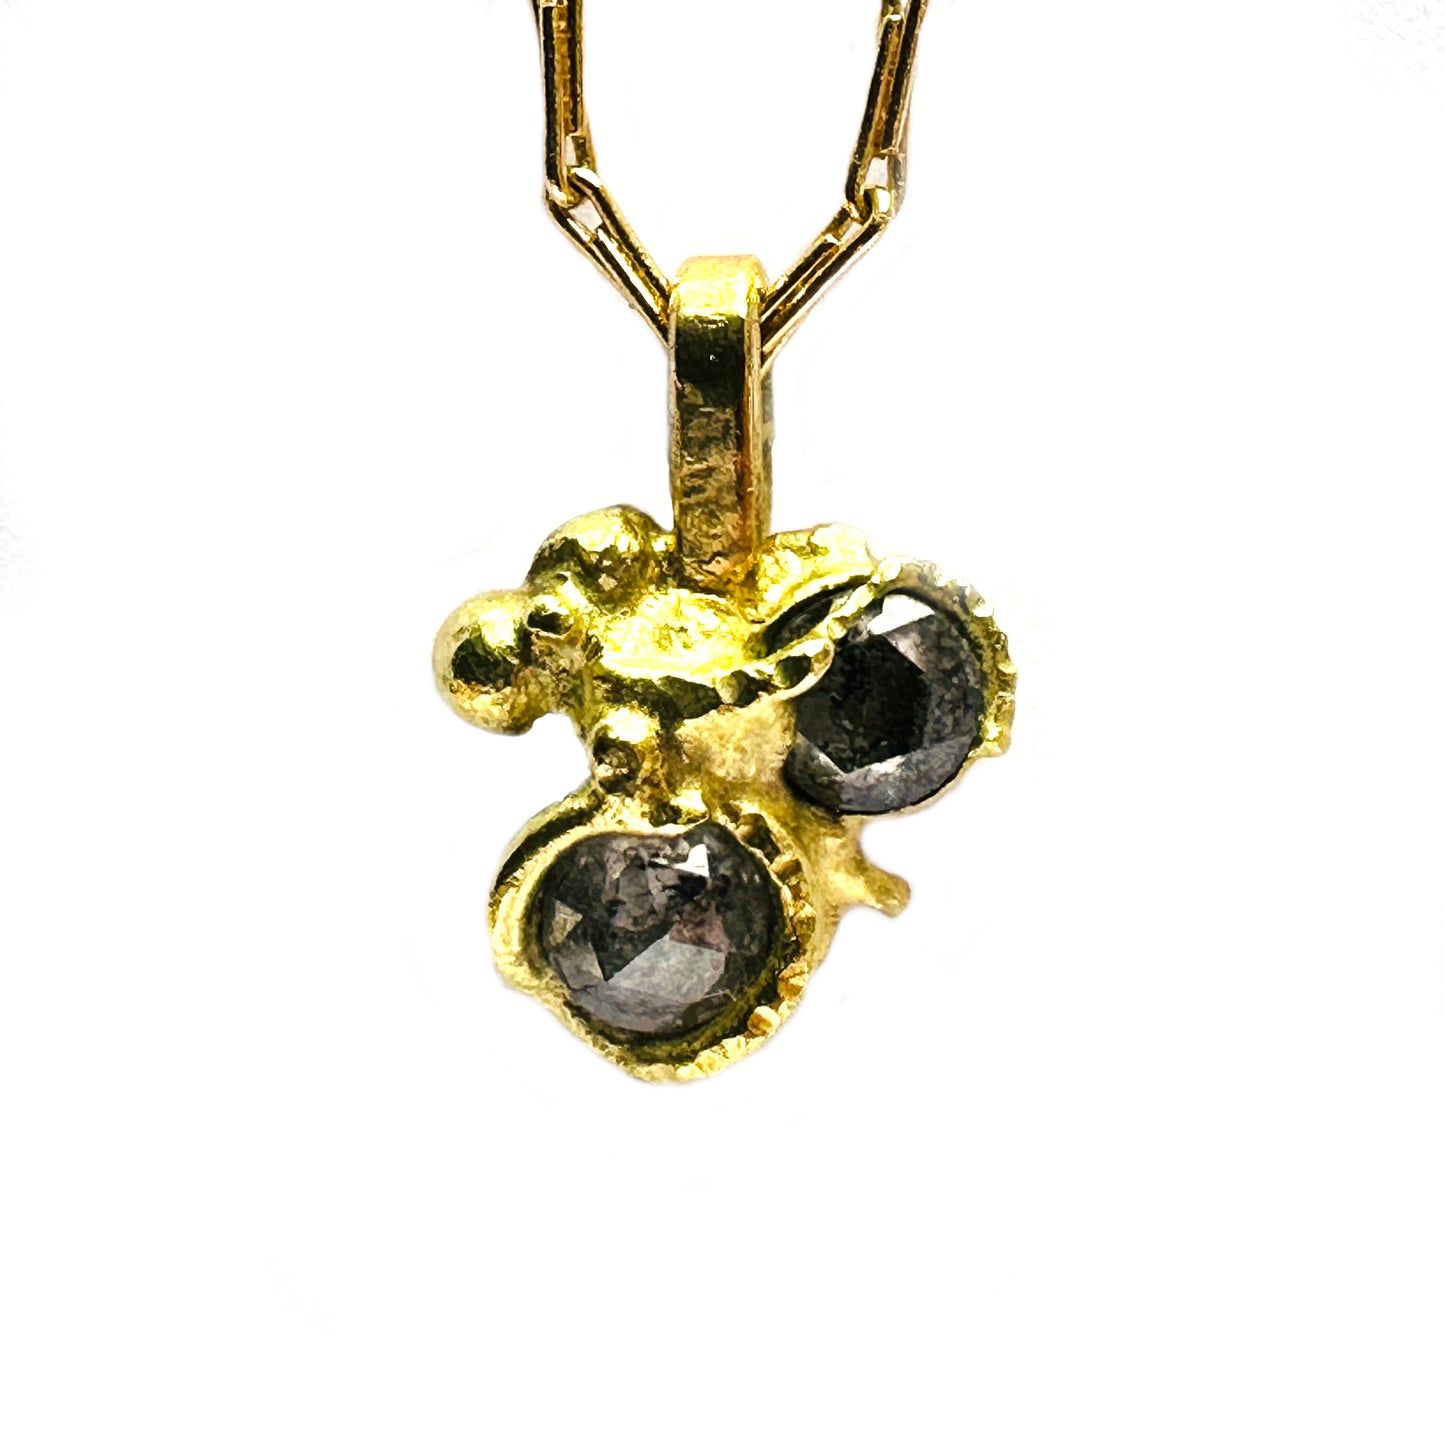 Molten gold double diamond pendant necklace